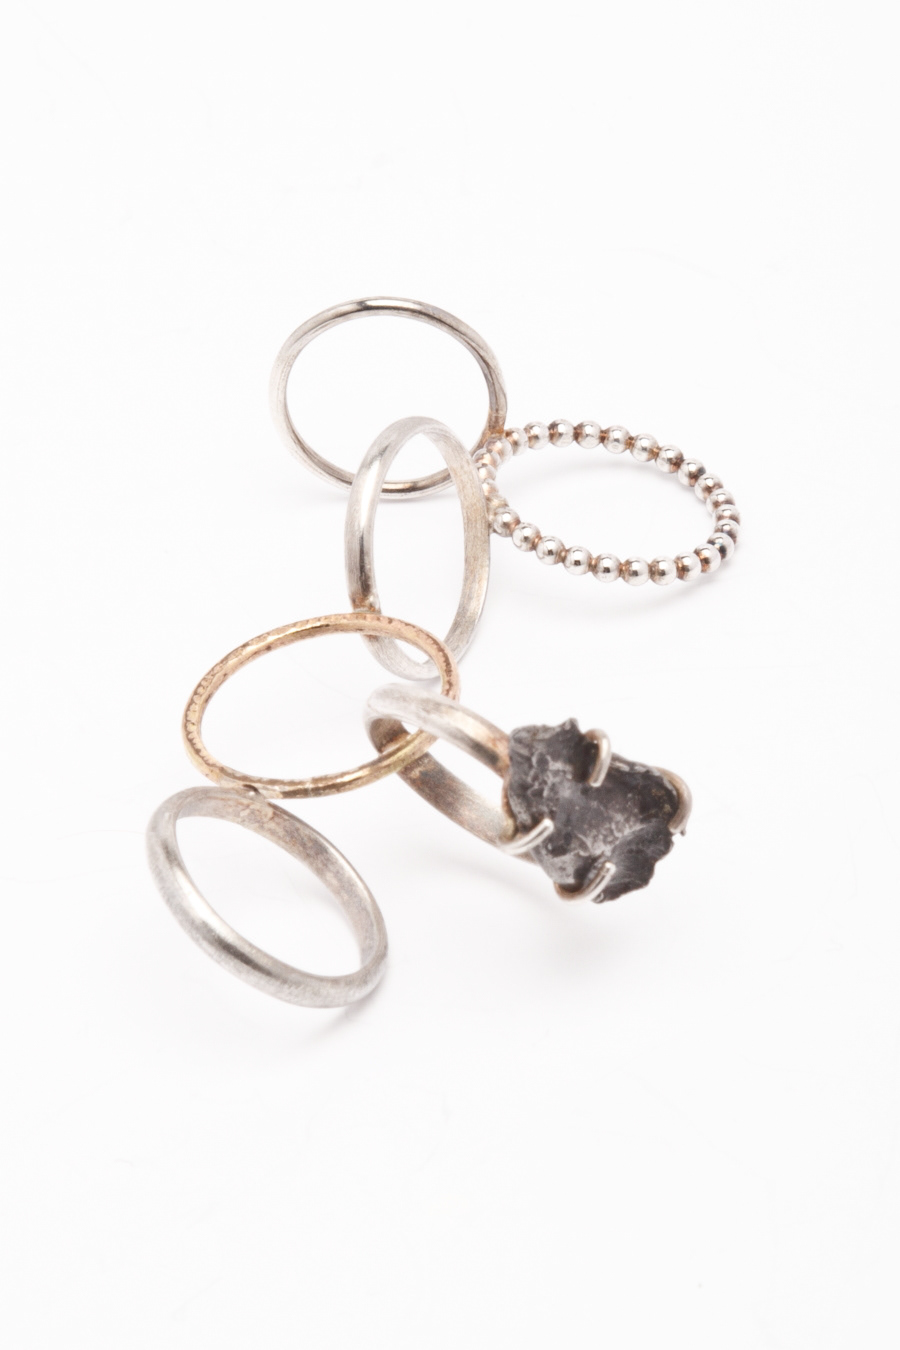 jewelry rings danamarieburmeister SCAD abstract sculpture rocks minerals silver gold